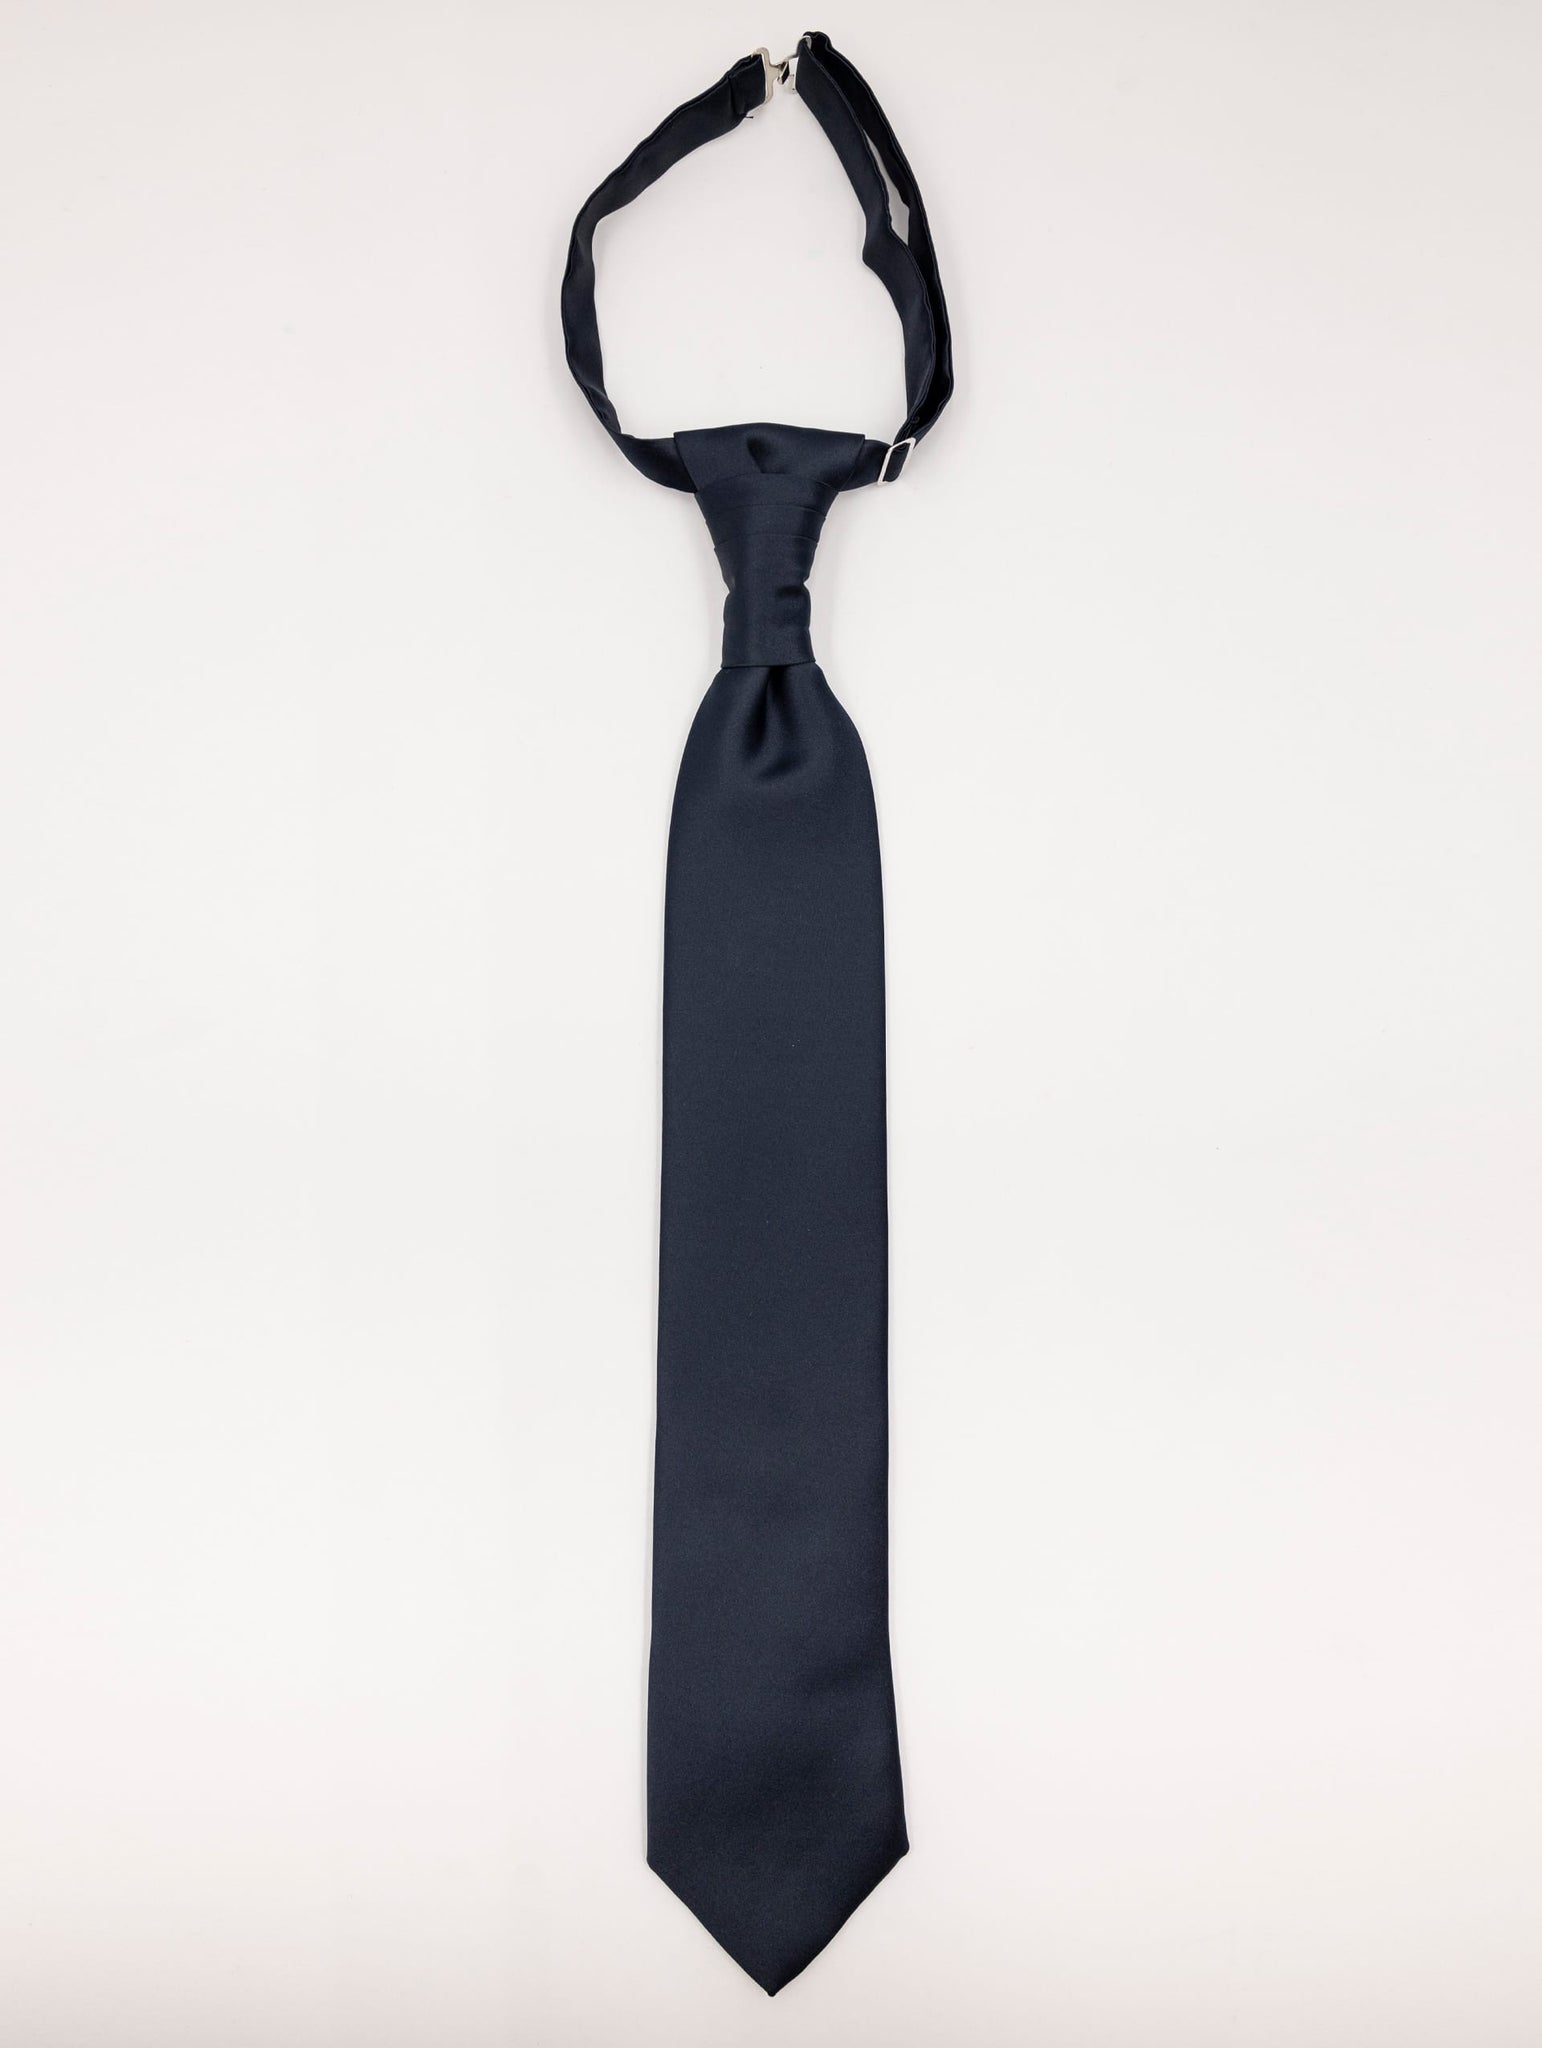 Cravatta da Cerimonia Lugi Bianchi Mantova con Nodo Blu